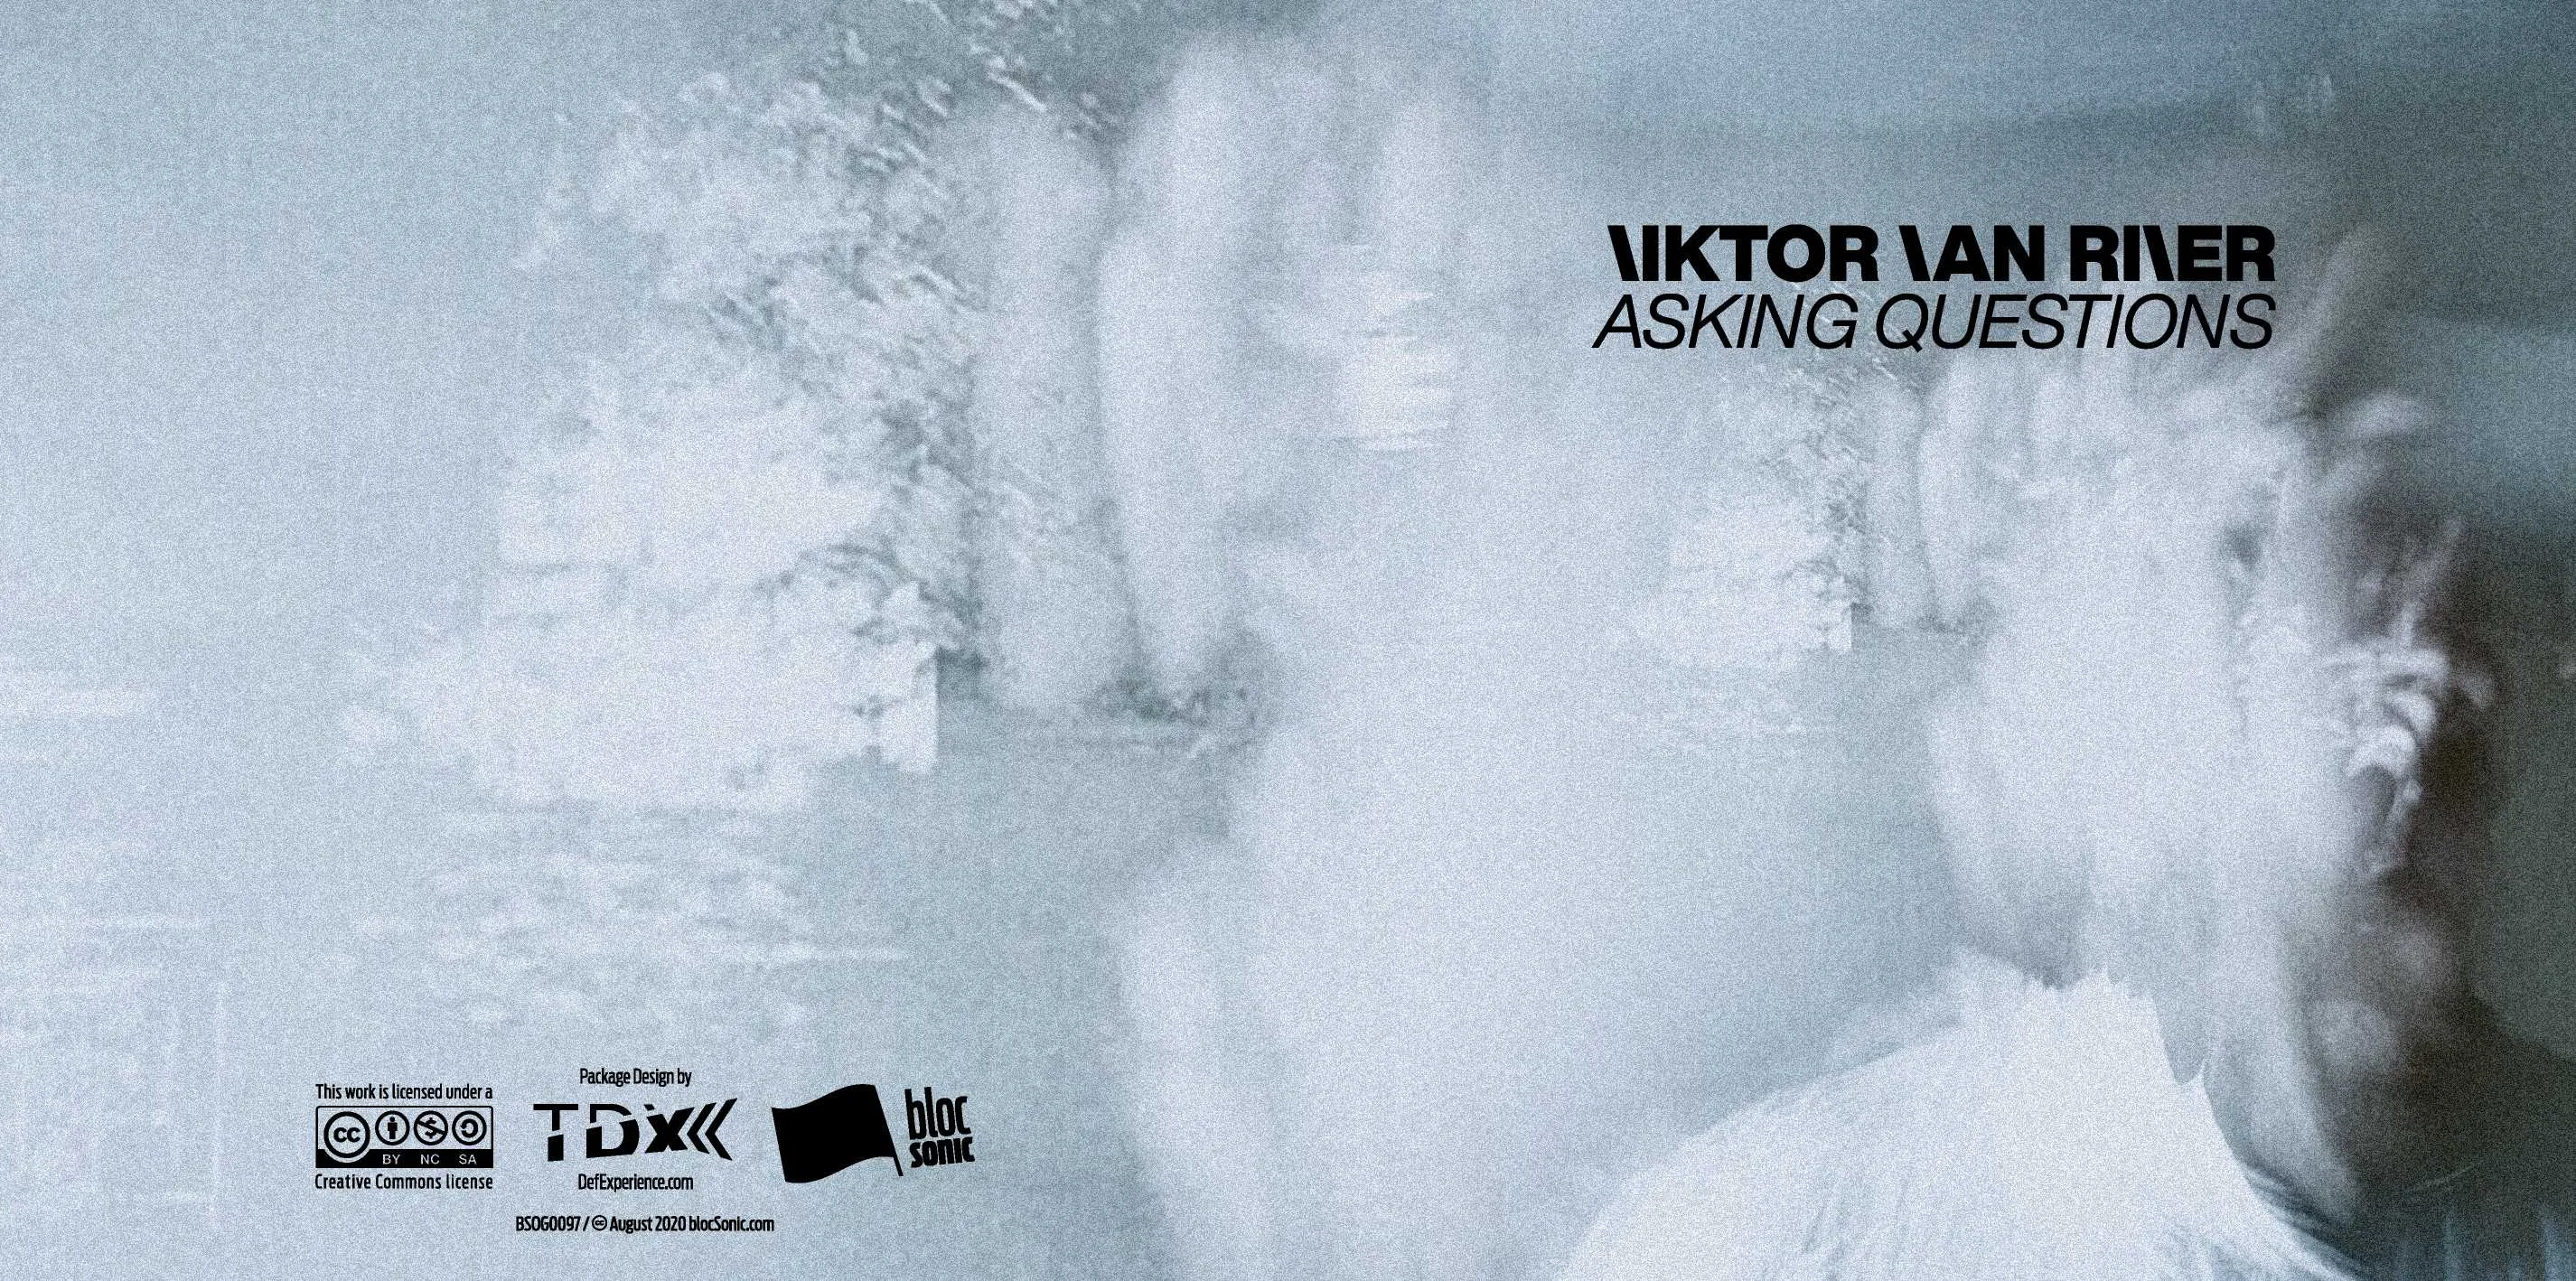 Album insert for “Asking Questions” by Viktor Van River